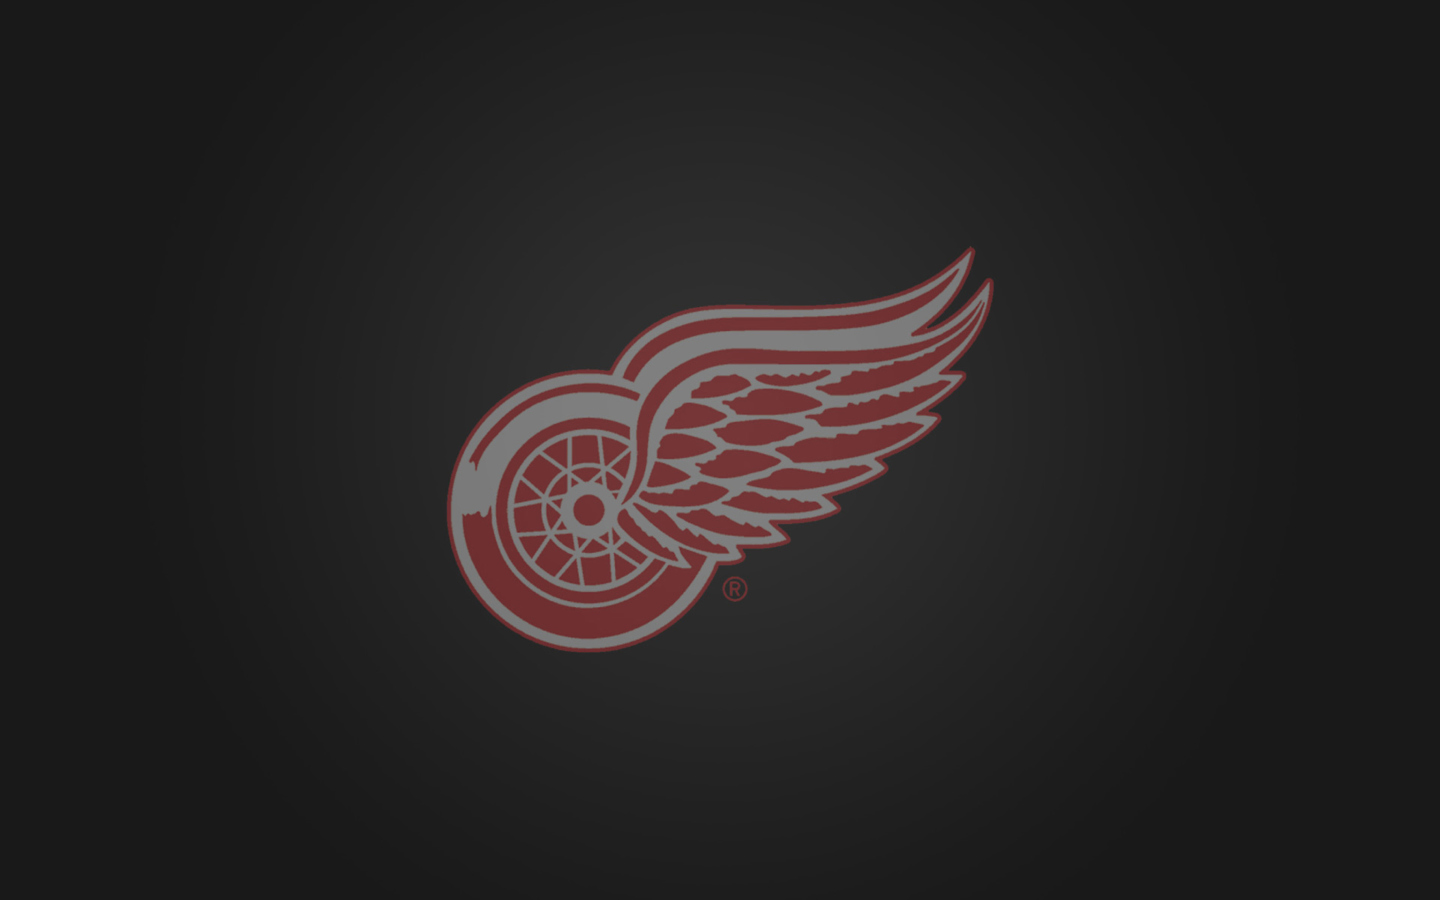 Detroit Red Wings wallpaper 1440x900